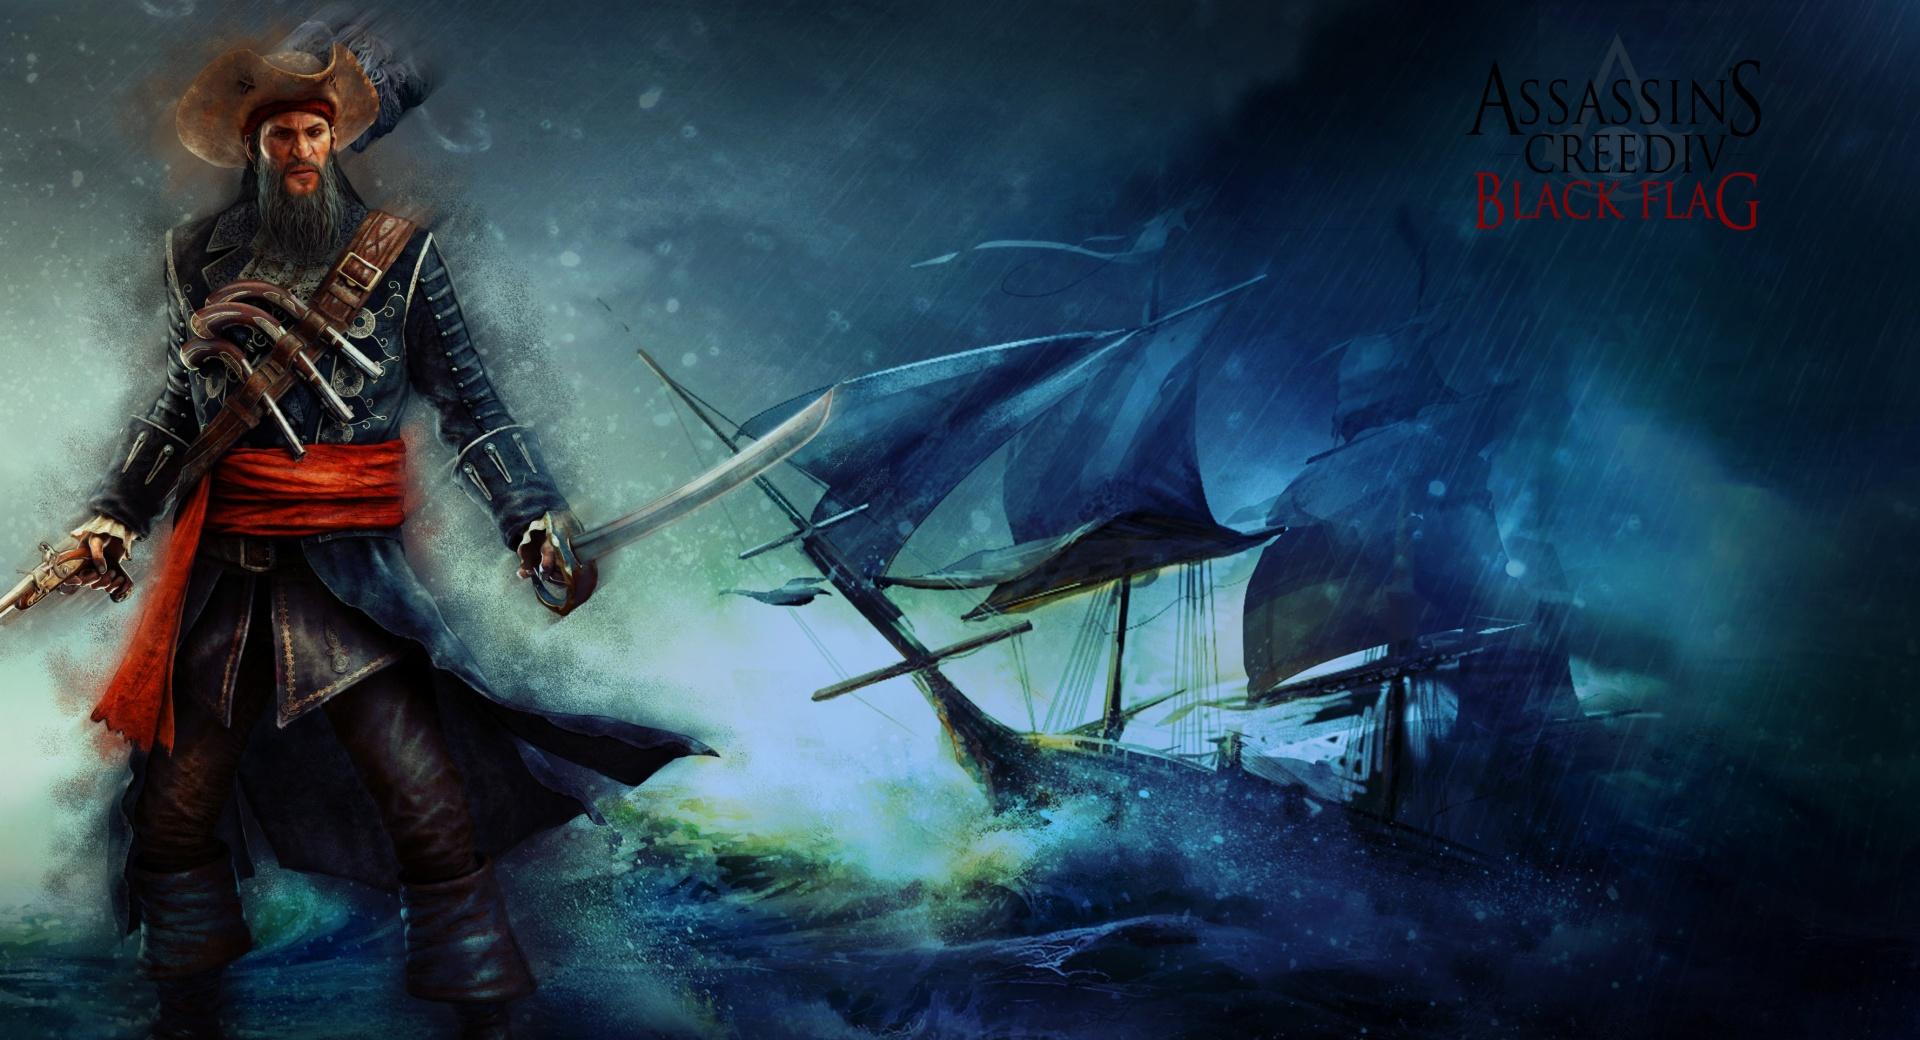 Assassins Creed IV Black Flag Blackbeard at 1024 x 768 size wallpapers HD quality